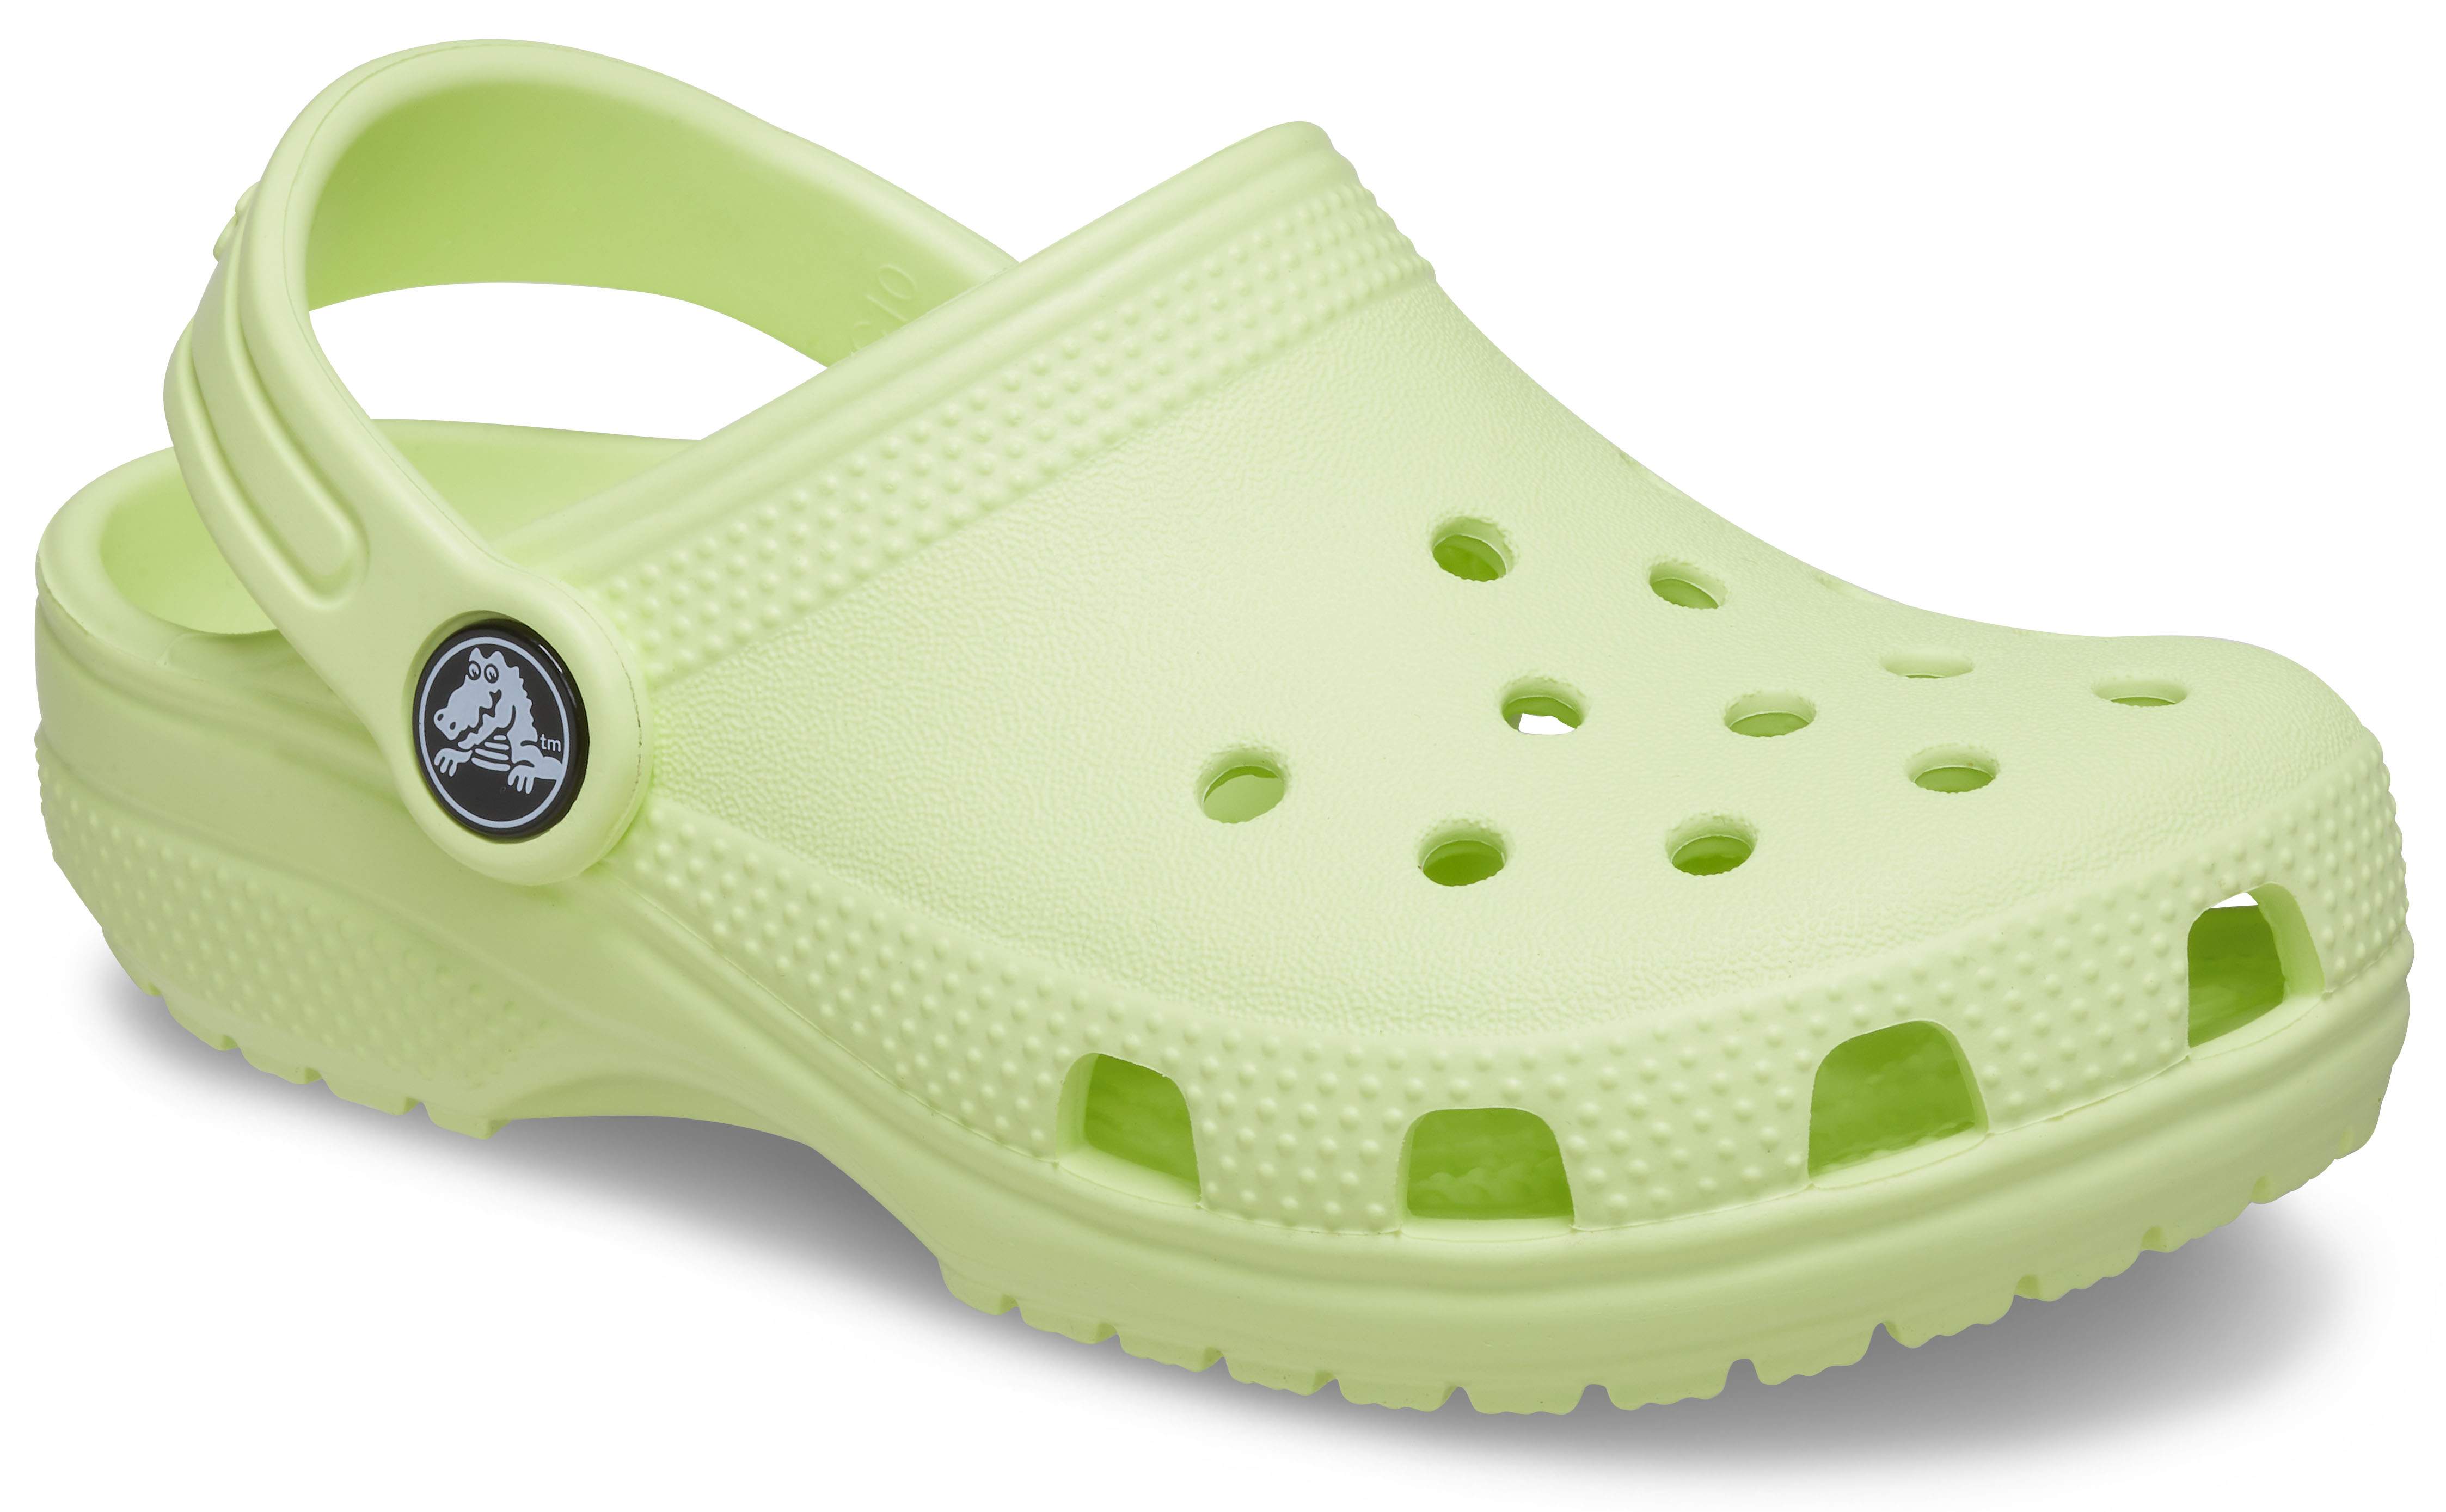 Crocs Classic Clog|Comfortable Slip On Casual Water Shoe Deep Green 6 US Men Medium US 8 US Women